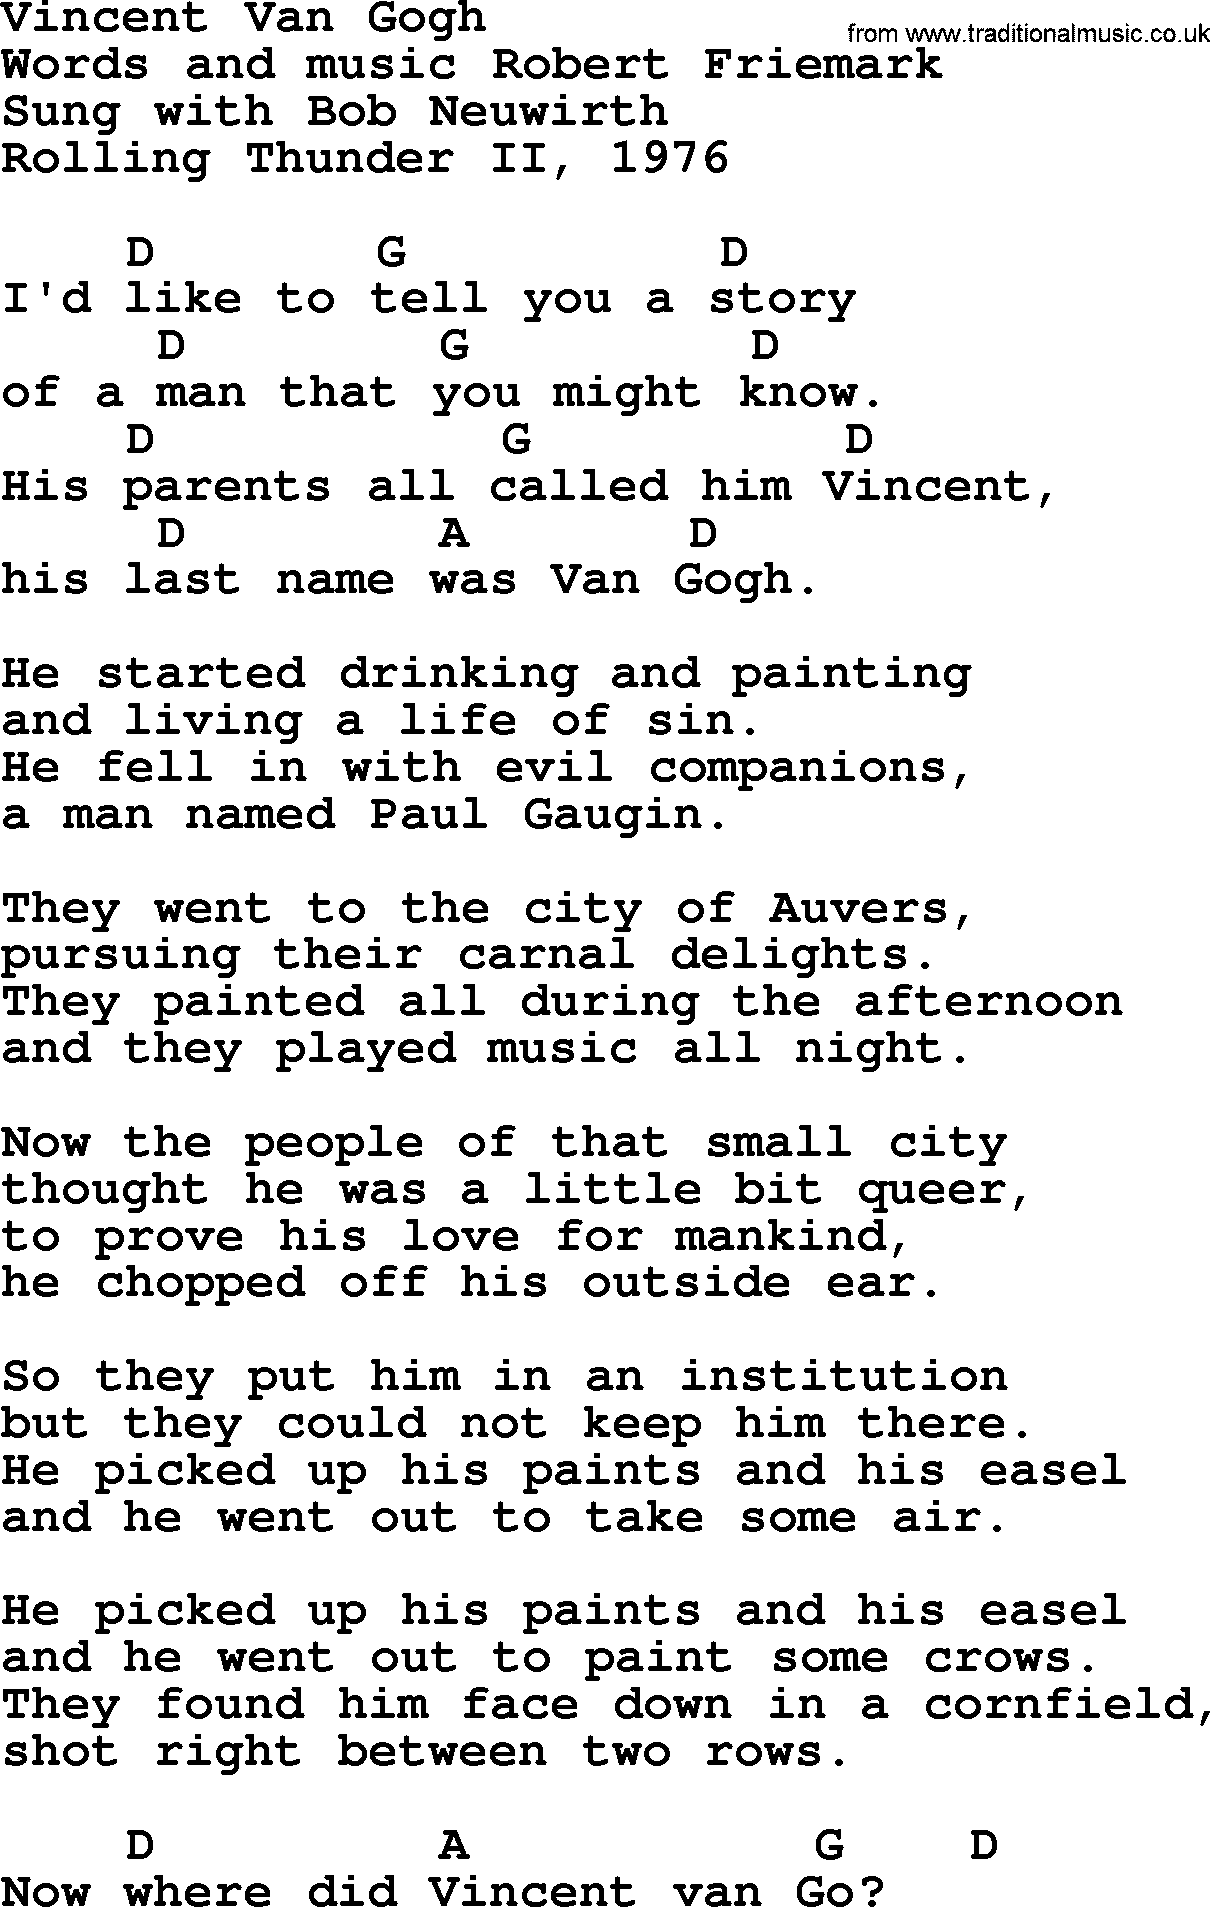 Bob Dylan song, lyrics with chords - Vincent Van Gogh